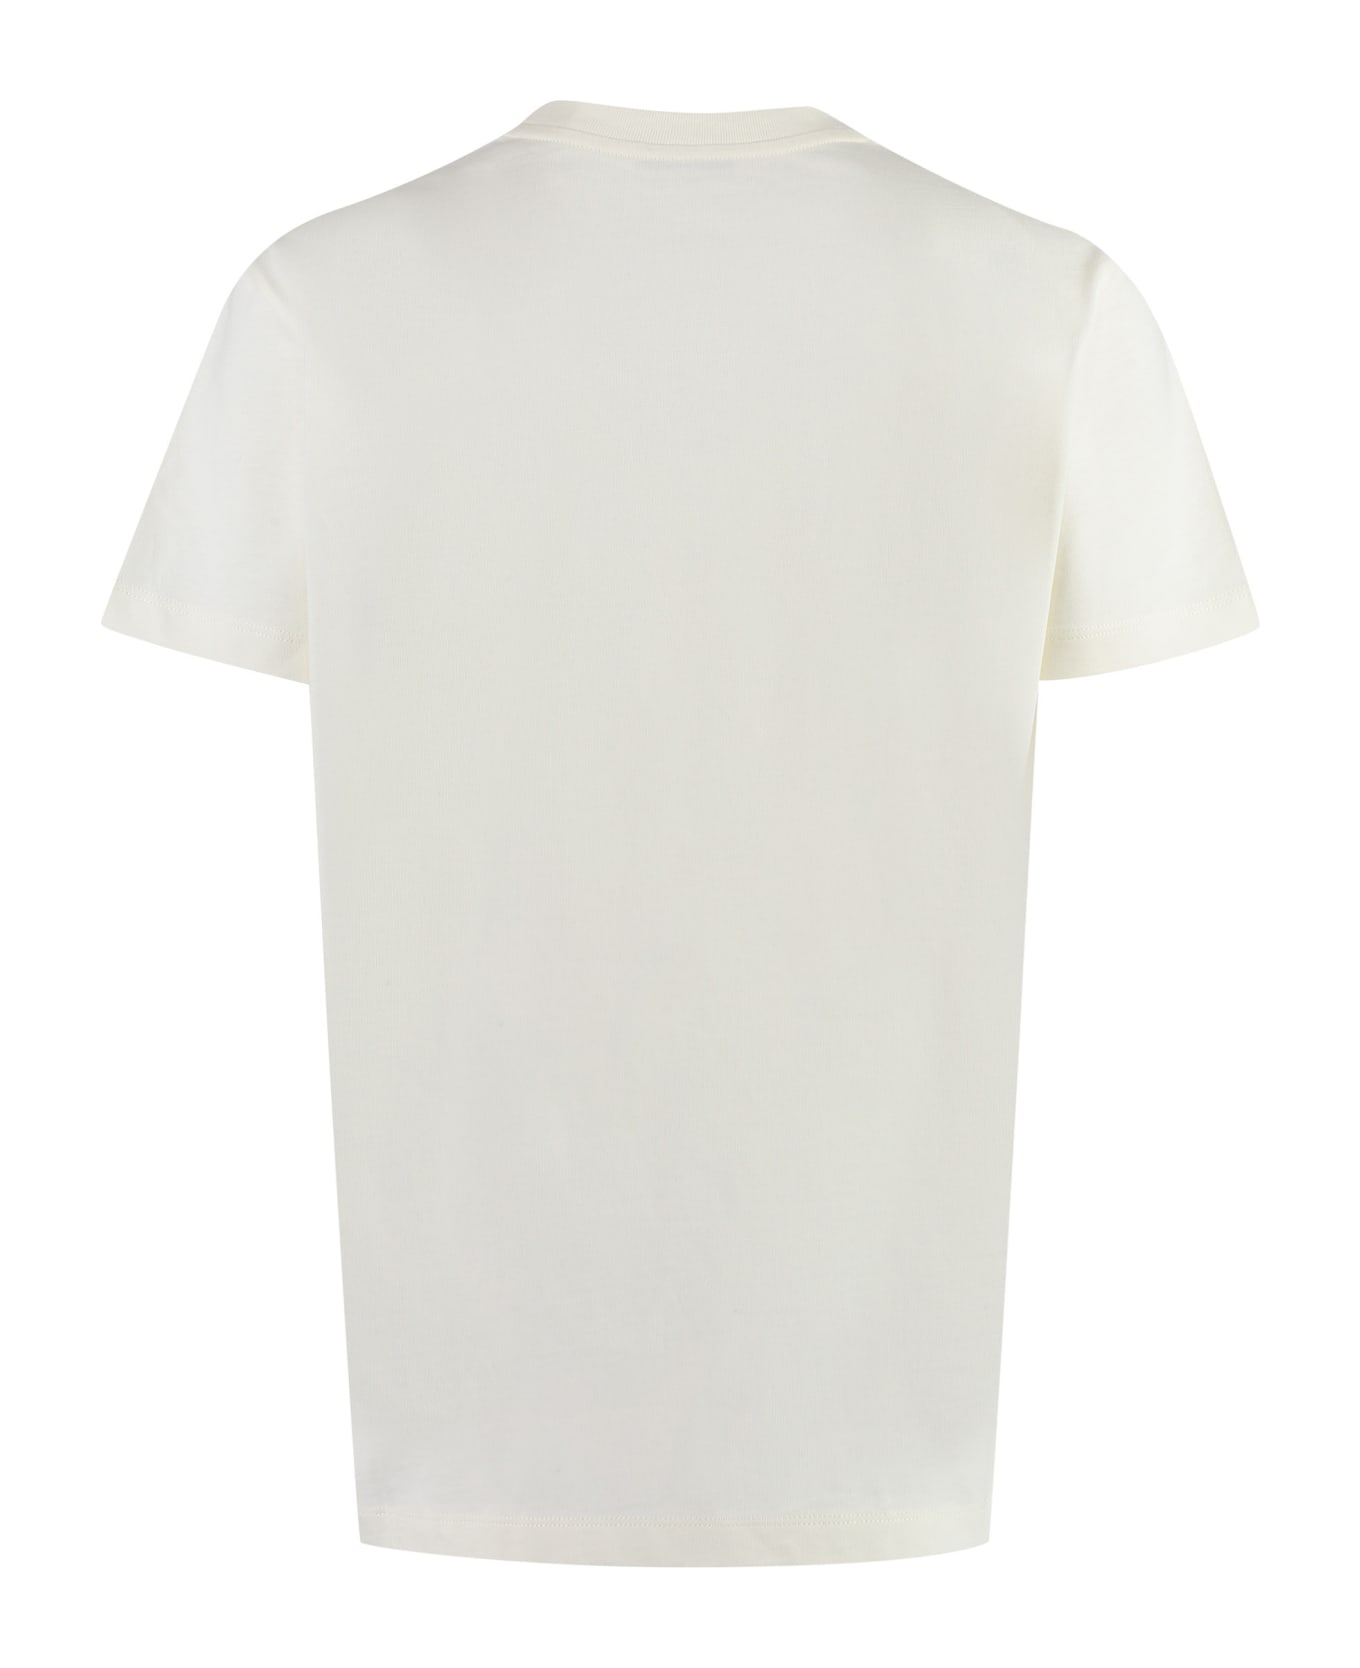 Moncler Cotton Crew-neck T-shirt - White